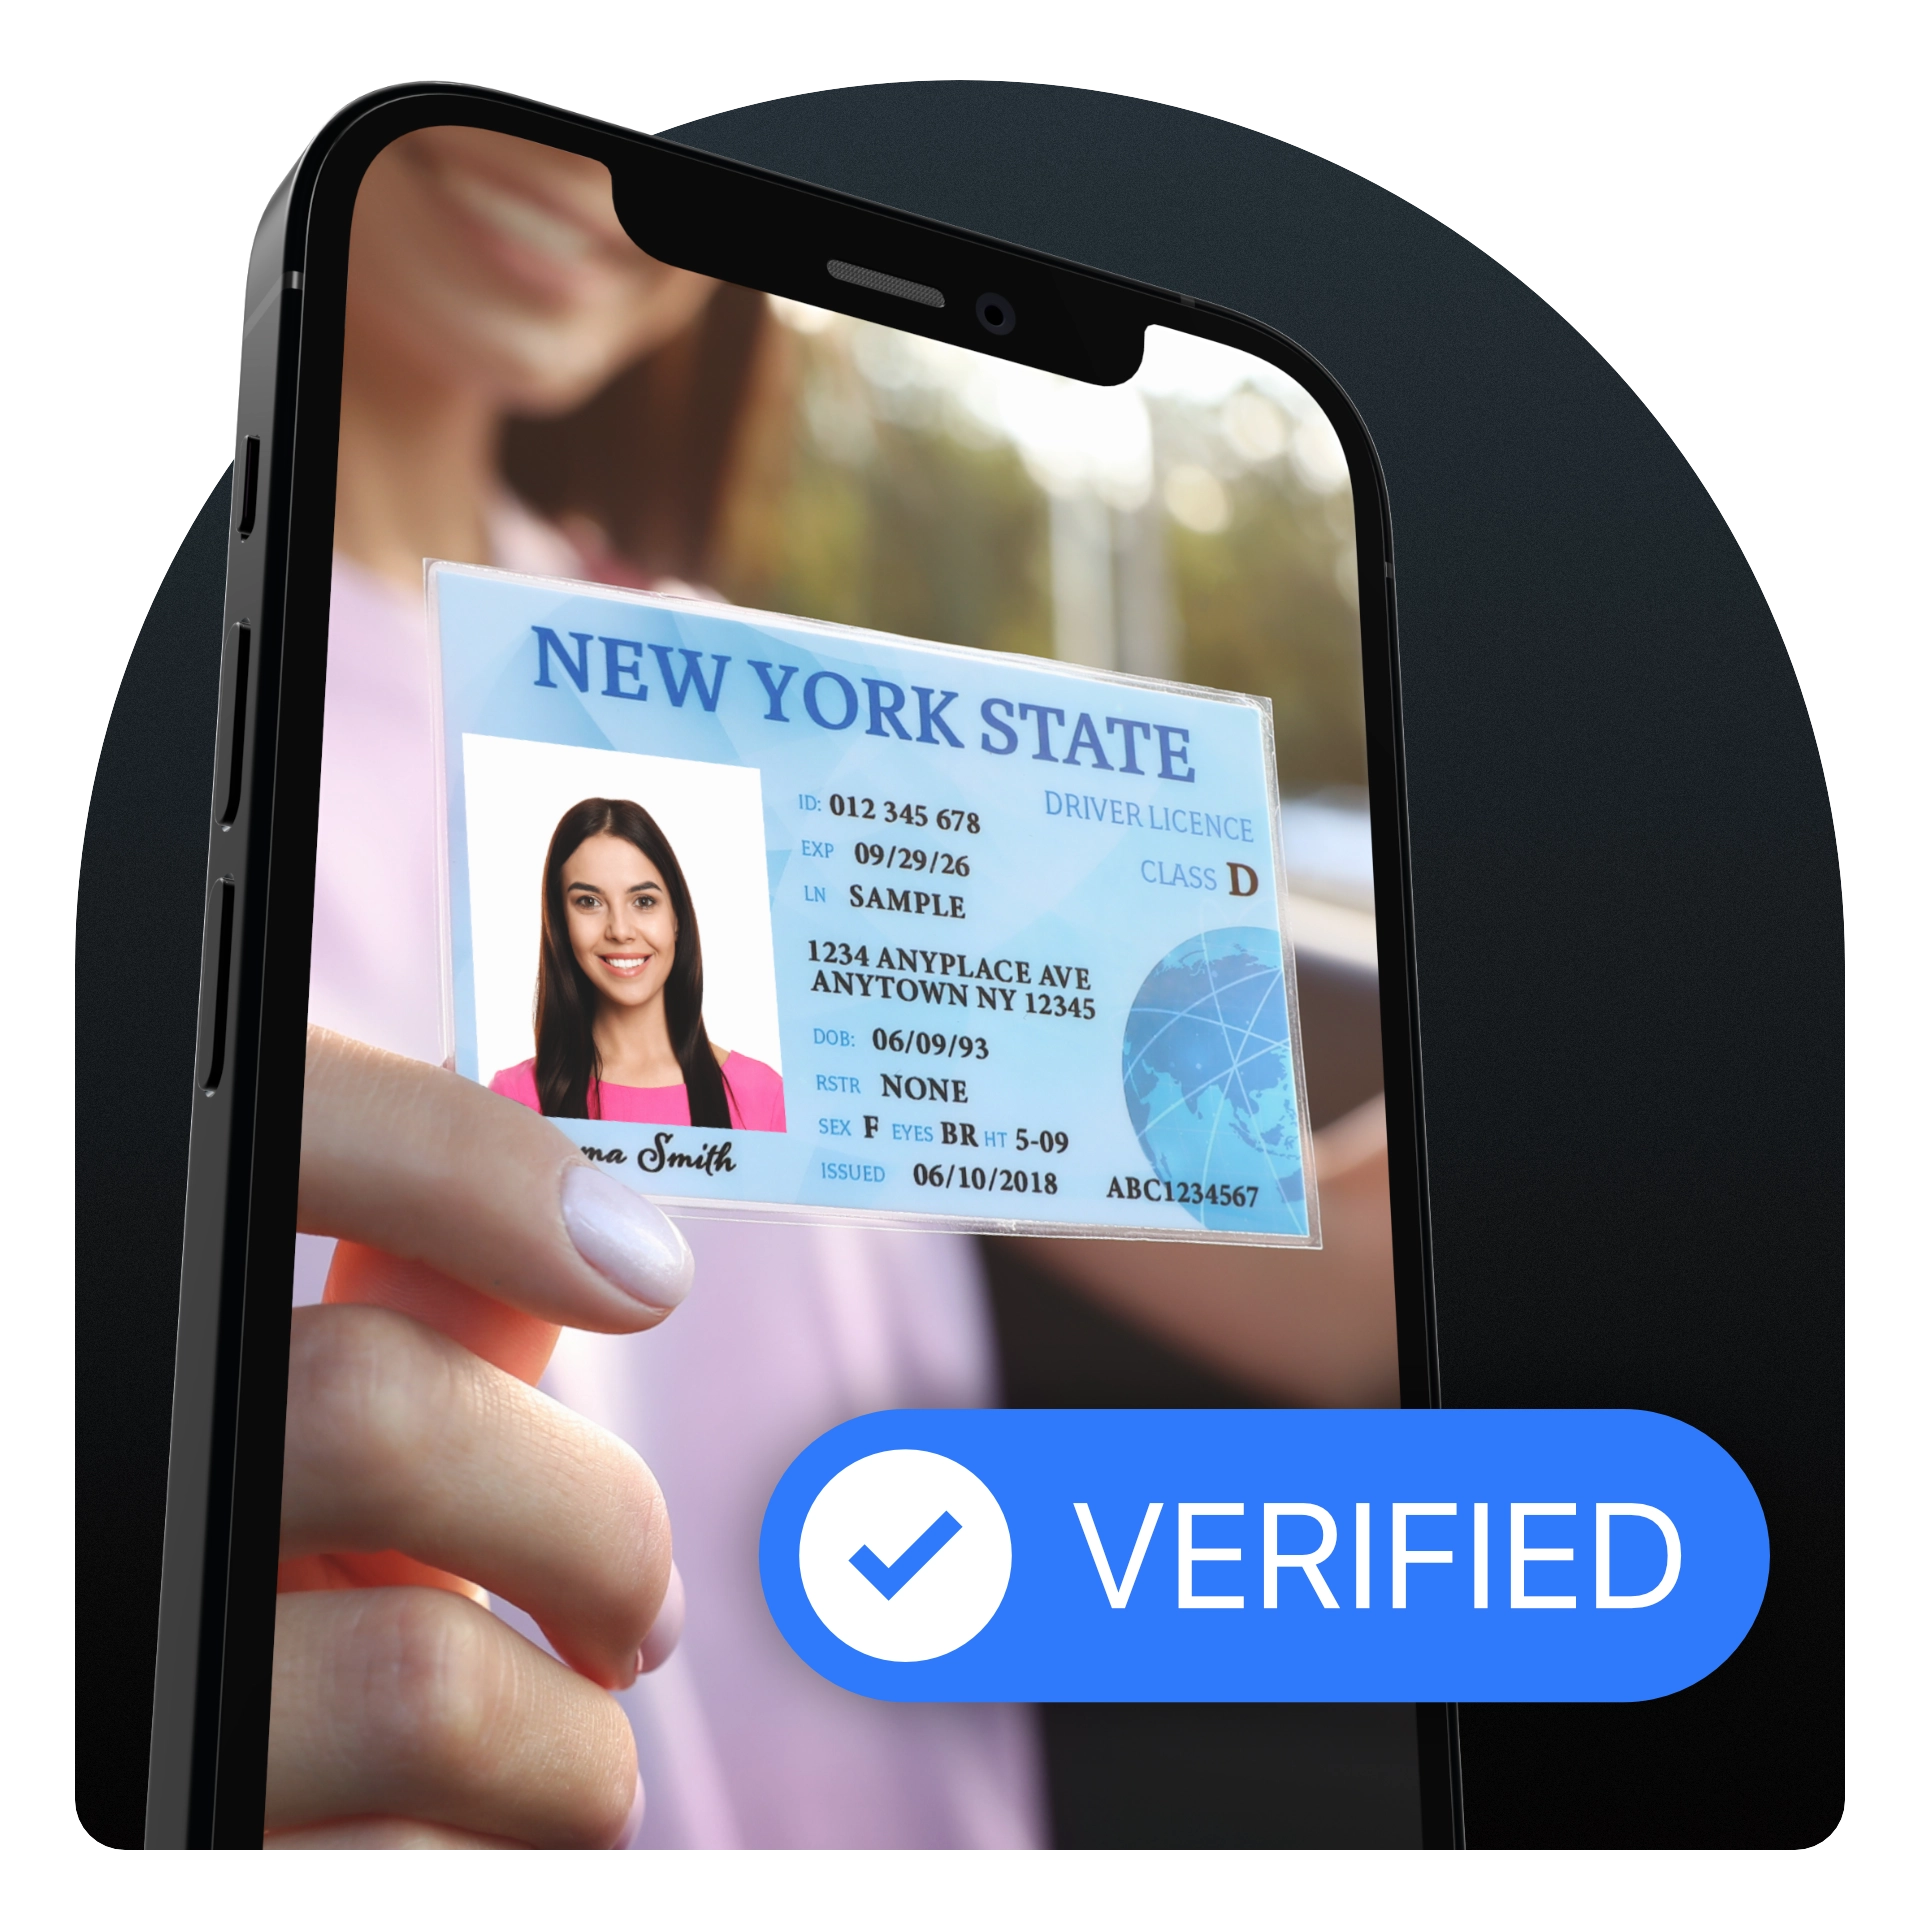 Guest ID verification